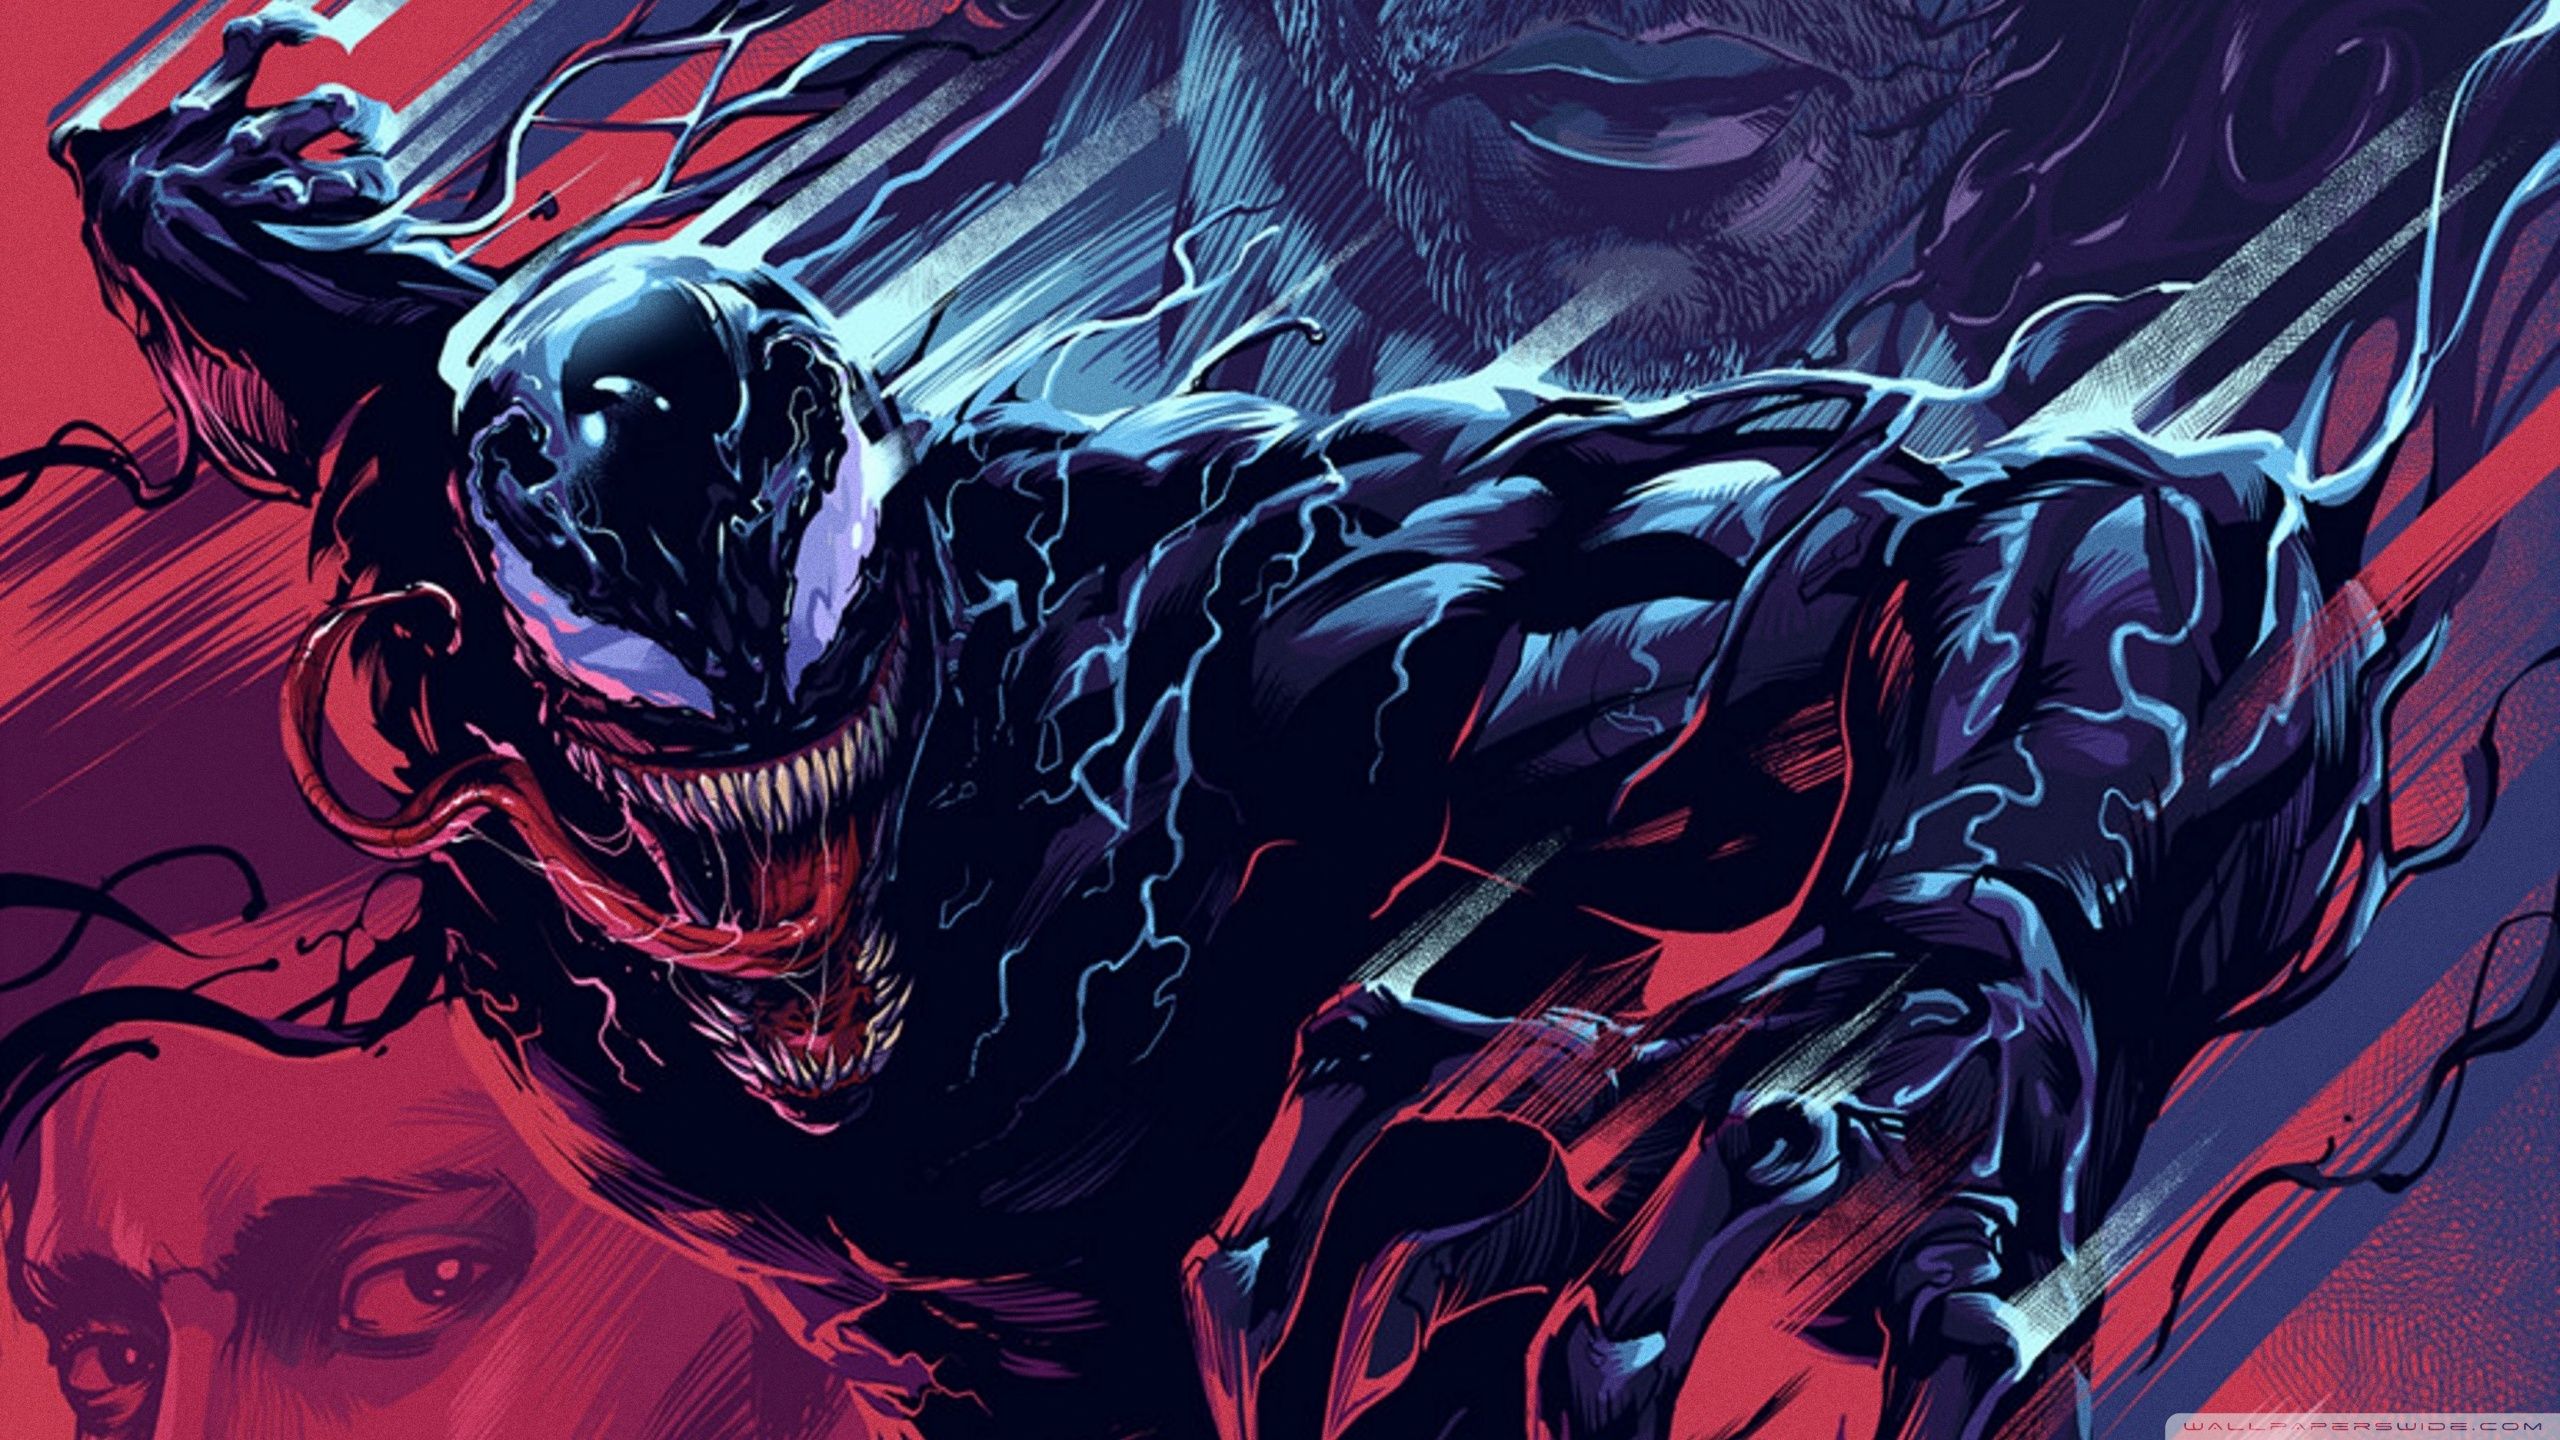 Venom Desktop Wallpaper